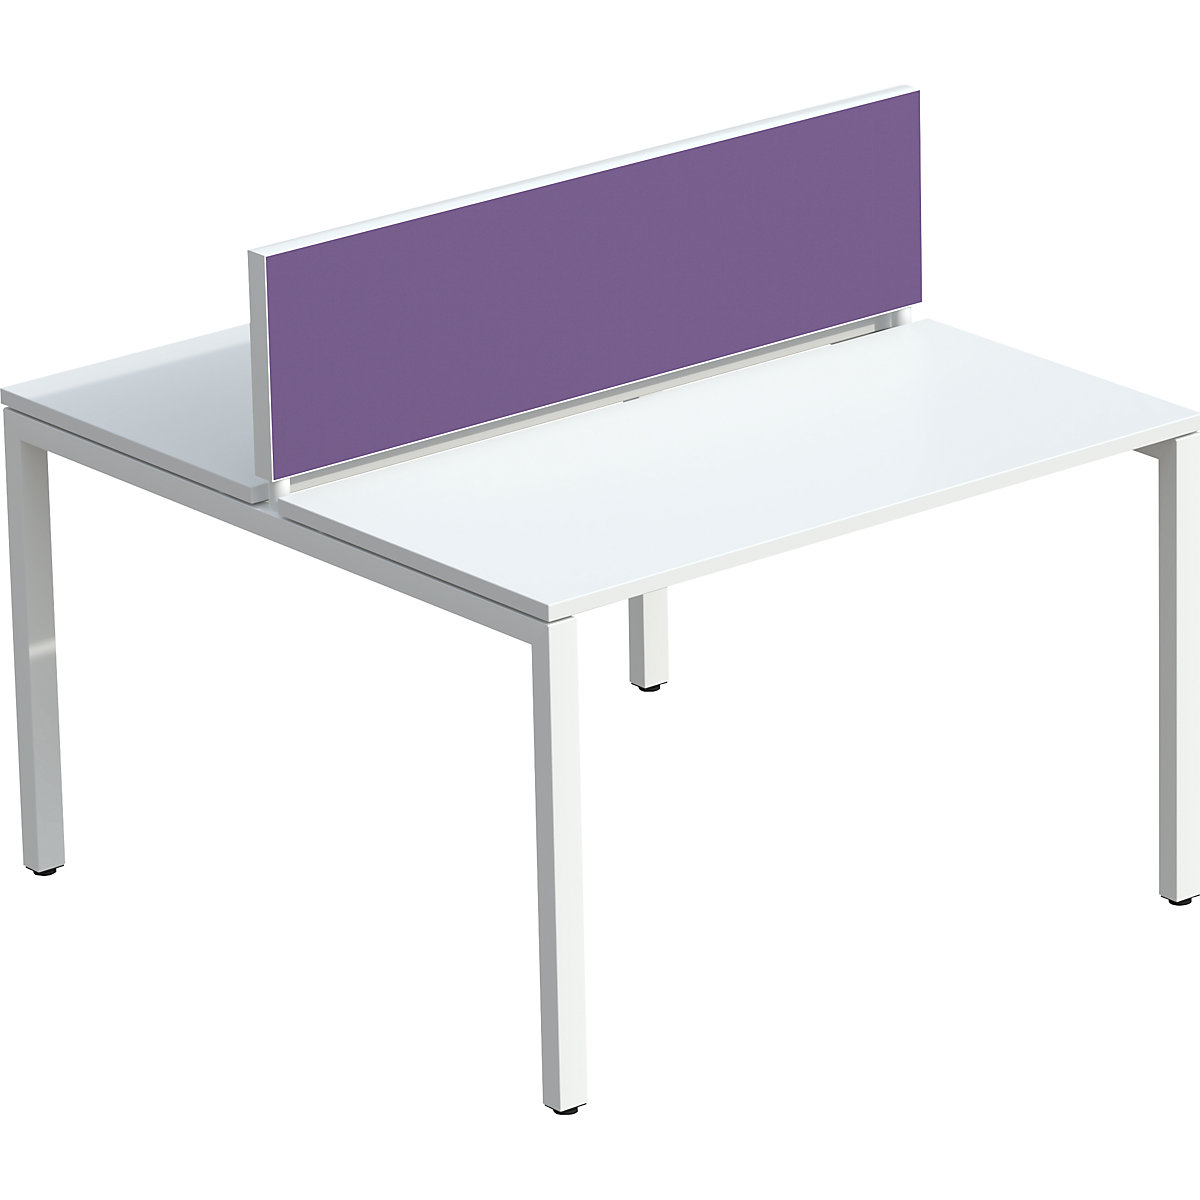 Table partition for team desks (Product illustration 17)-16